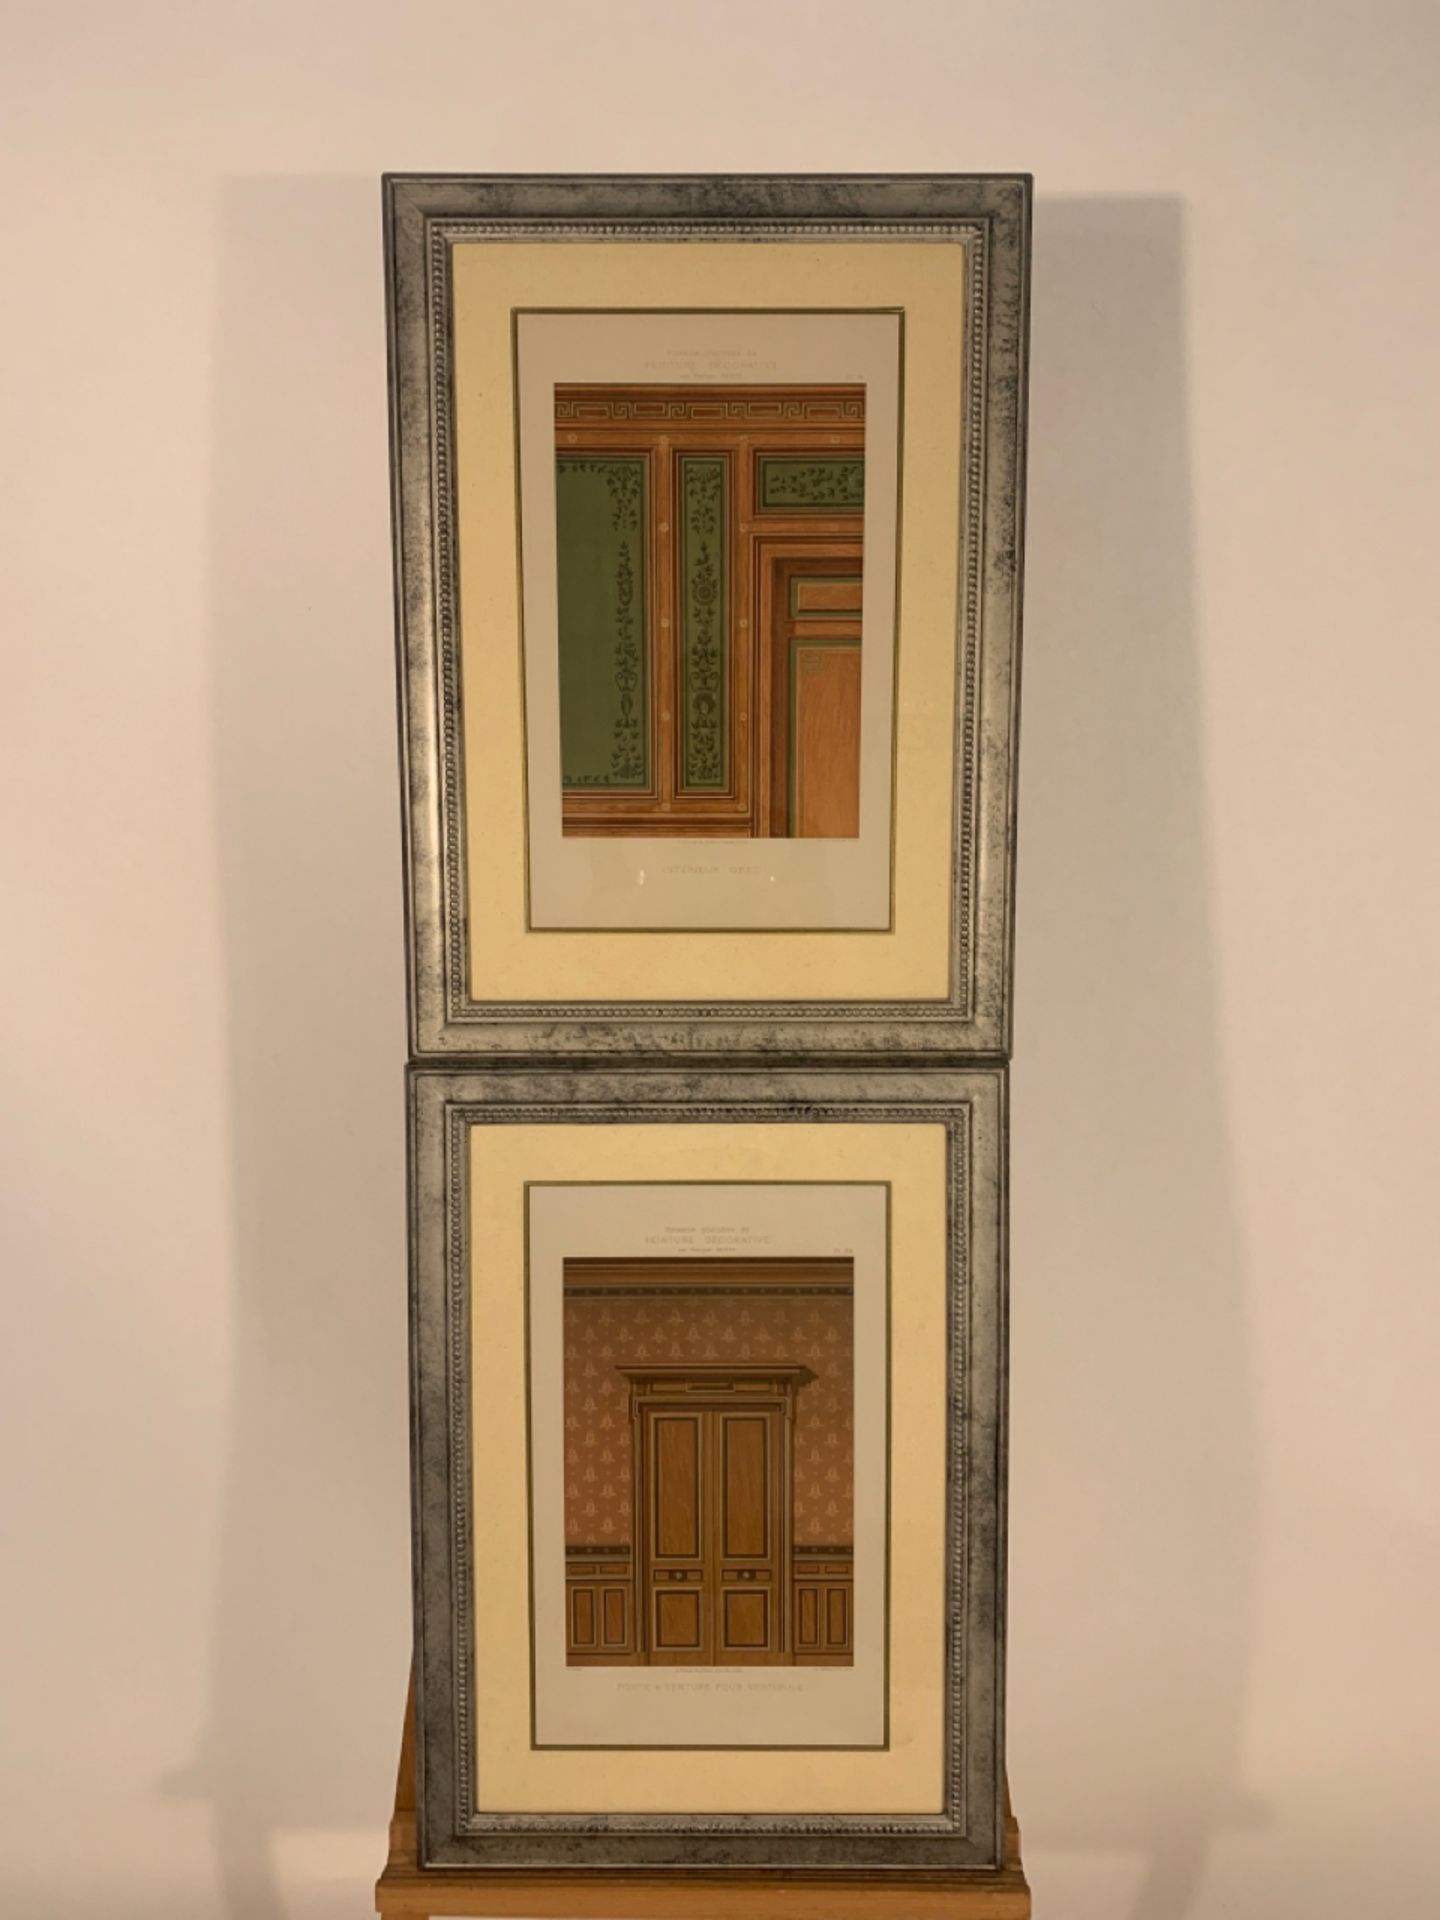 Set of 4 Decor Style Prints